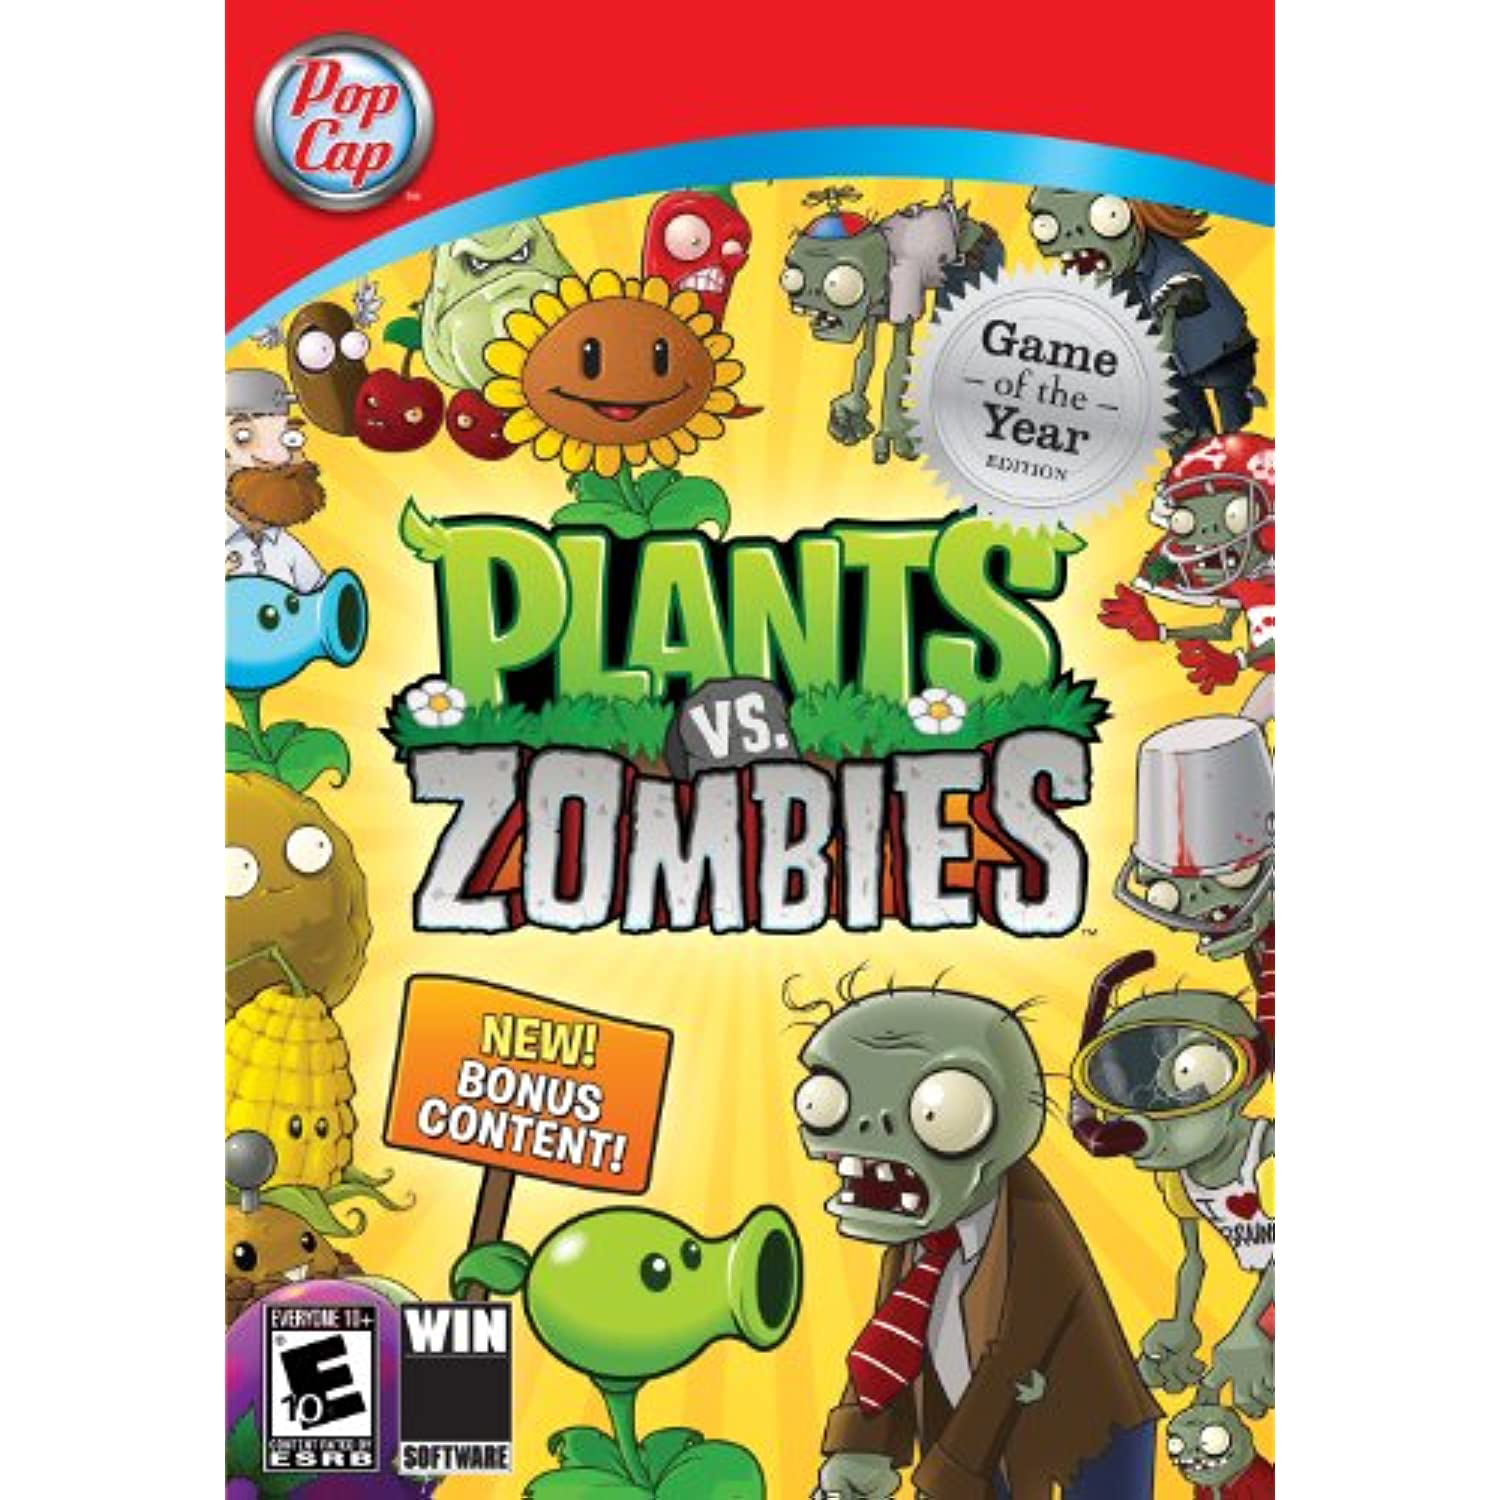  Plants vs. Zombies - Origin PC [Online Game Code] : Video Games